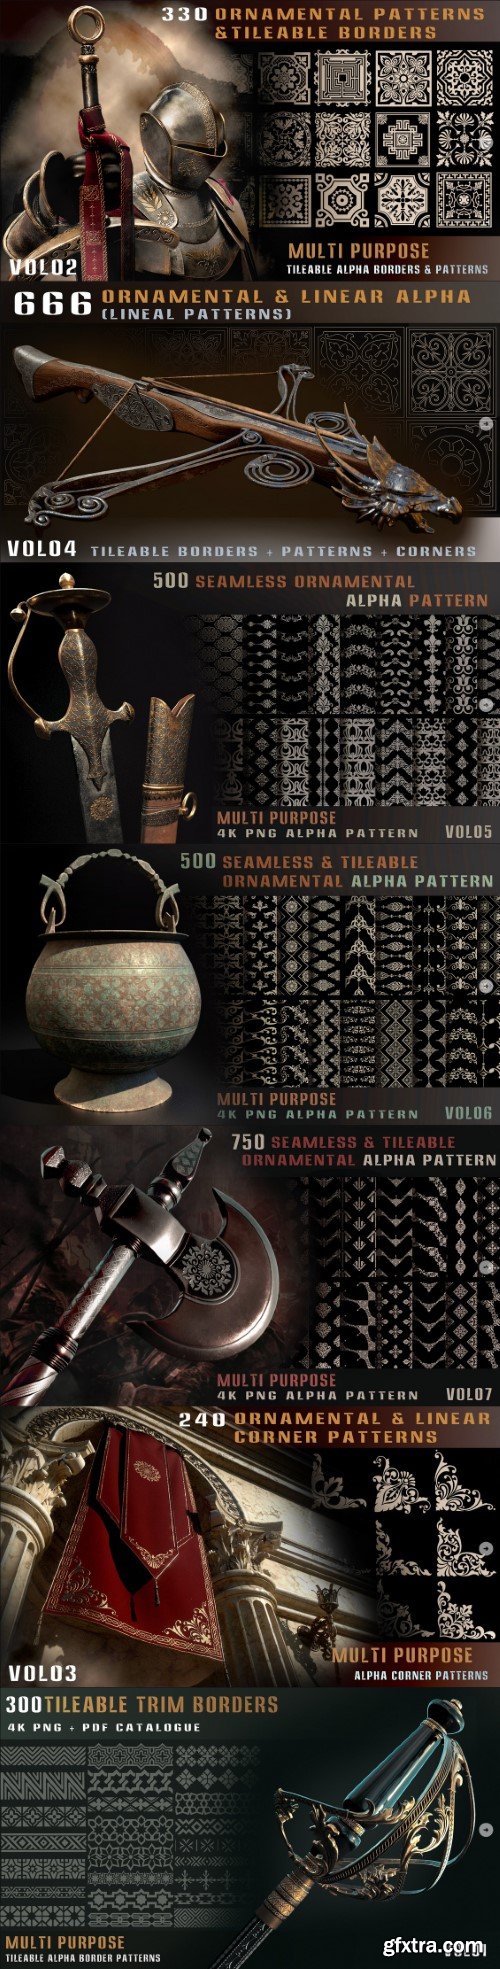 Artstation - +3200 ornamental pattern pack